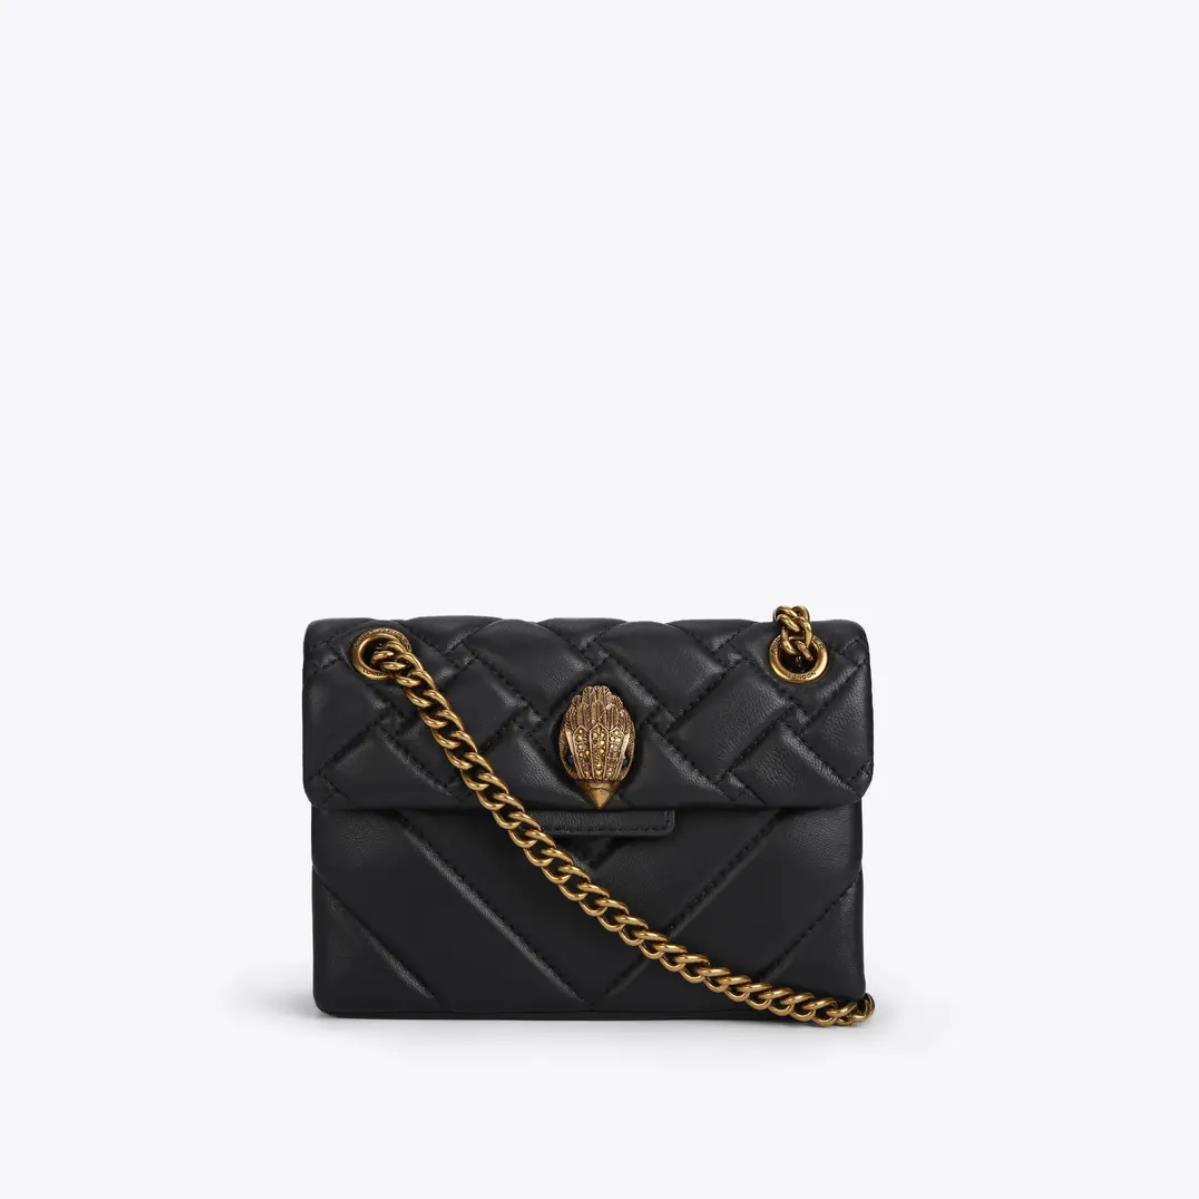 

Kurt Geiger London Kensington Mini 20cm Black Gold/Silver Chains Bags for Women Luxury Real Leather Cross Body Handbag